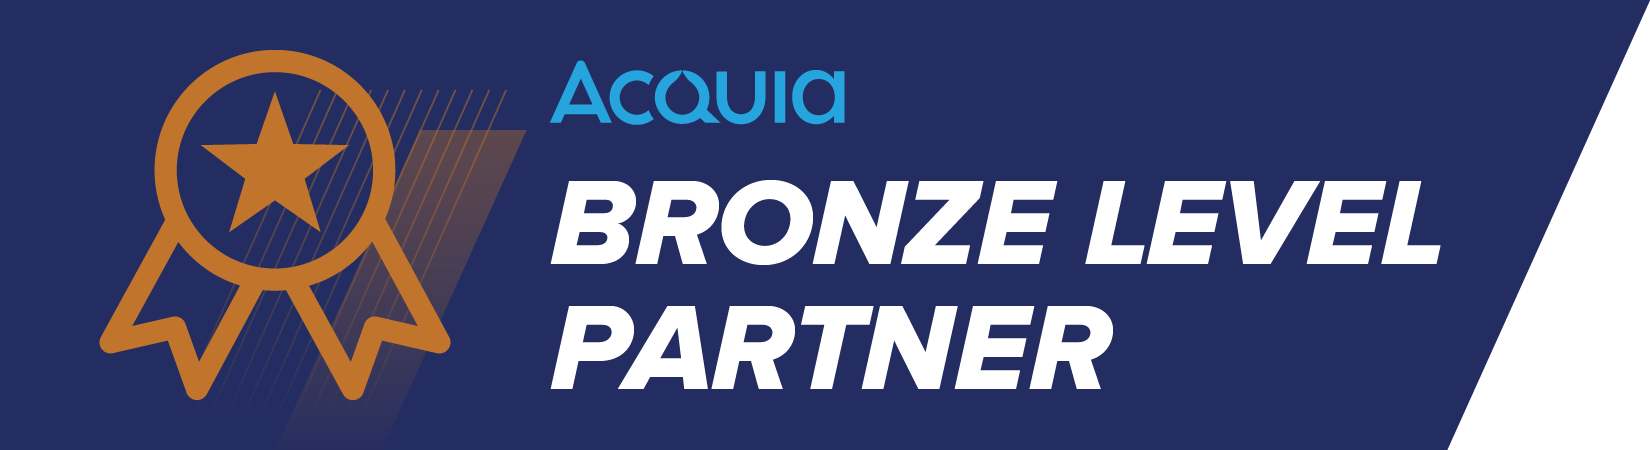 Acquia Bronze Level Partnership